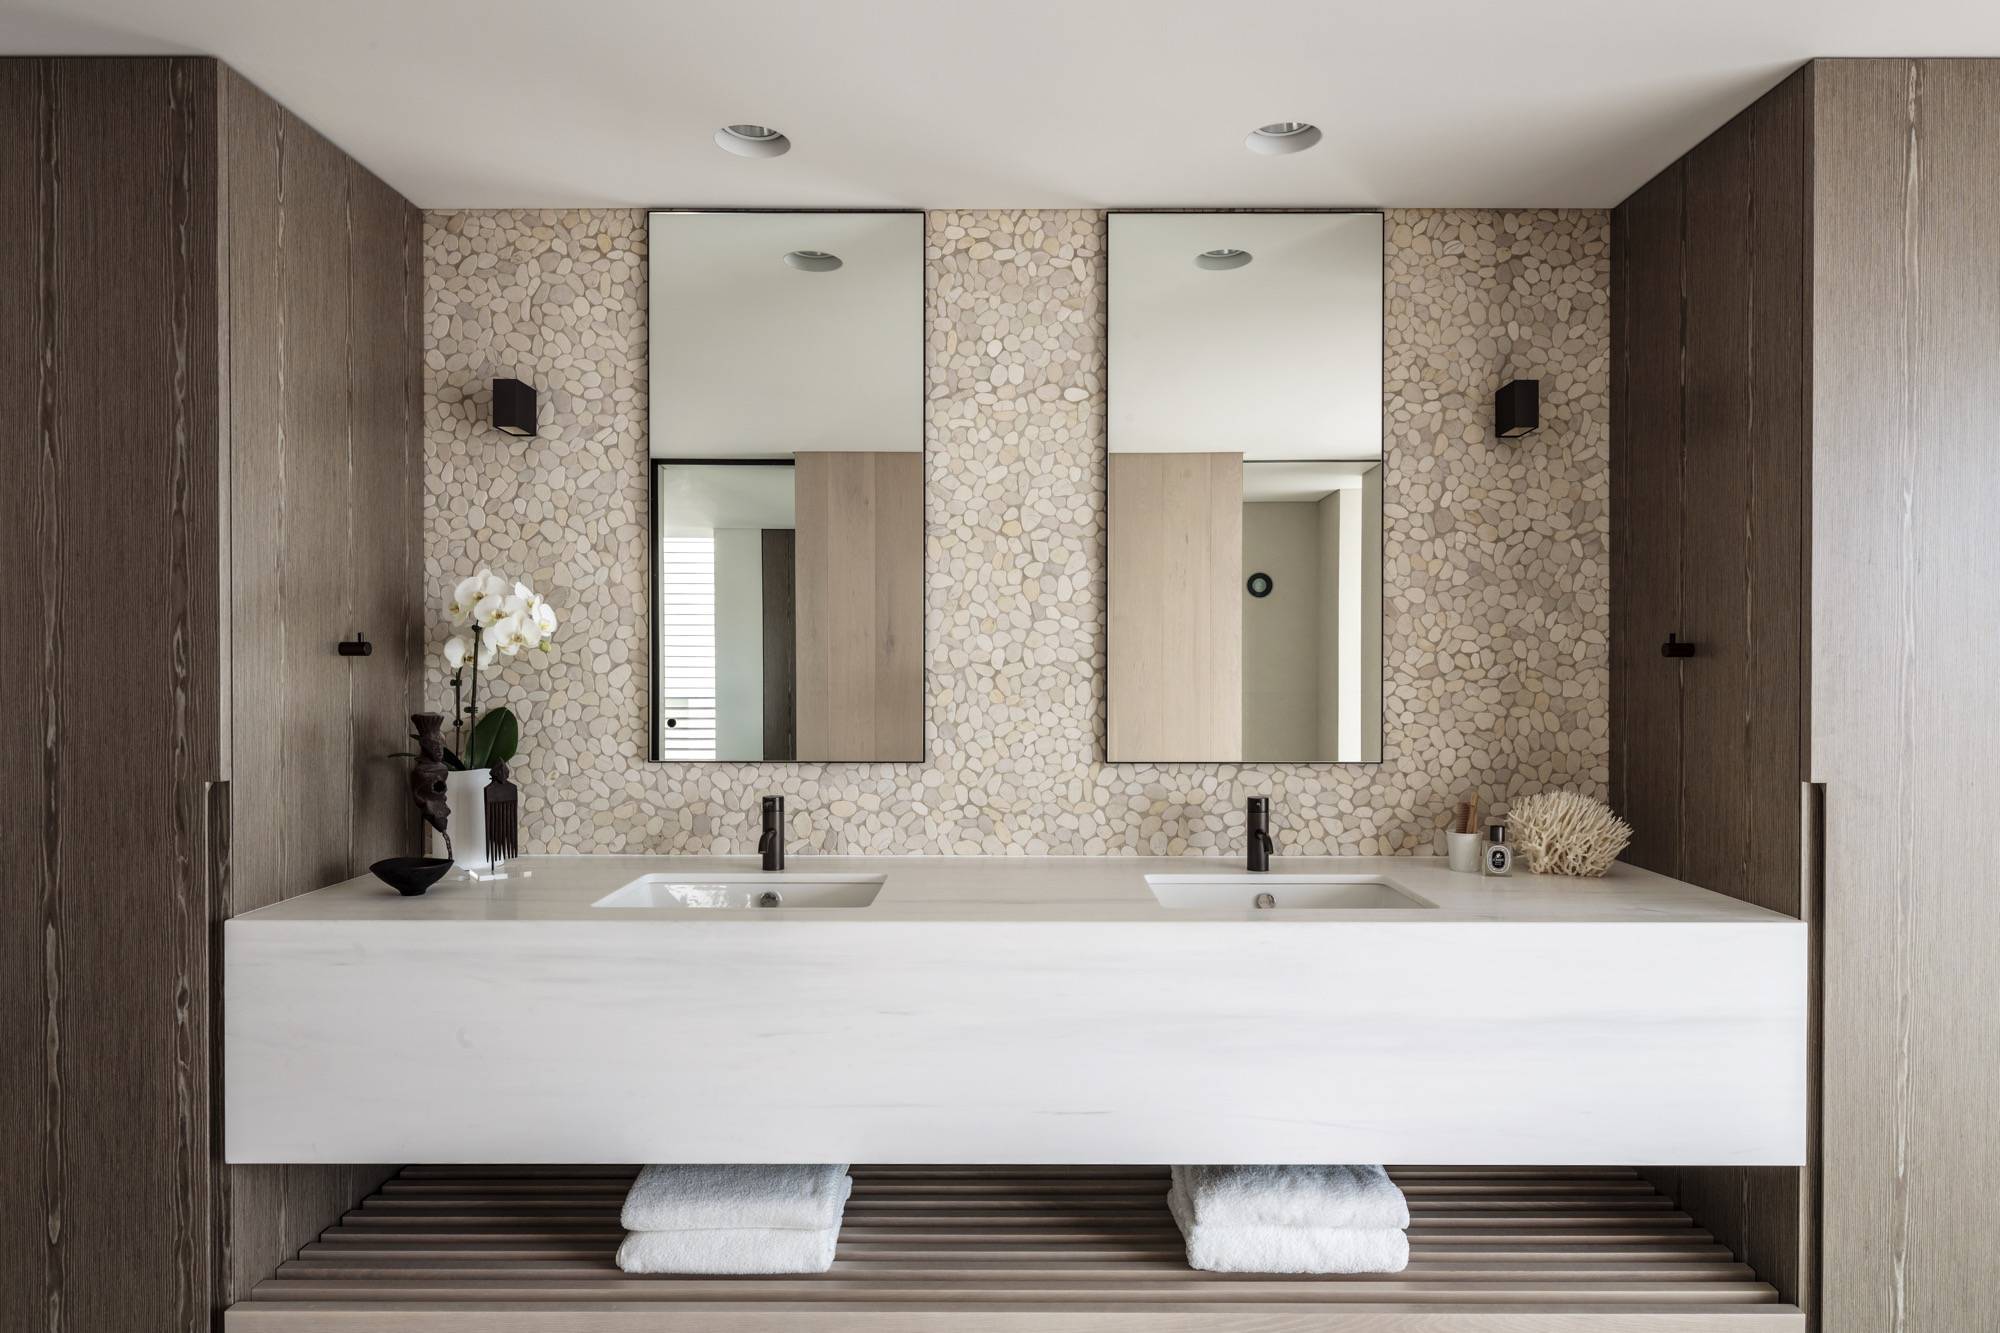 Ванная комната в стиле минимализм: выбор плиток, фото, варианты дизайна